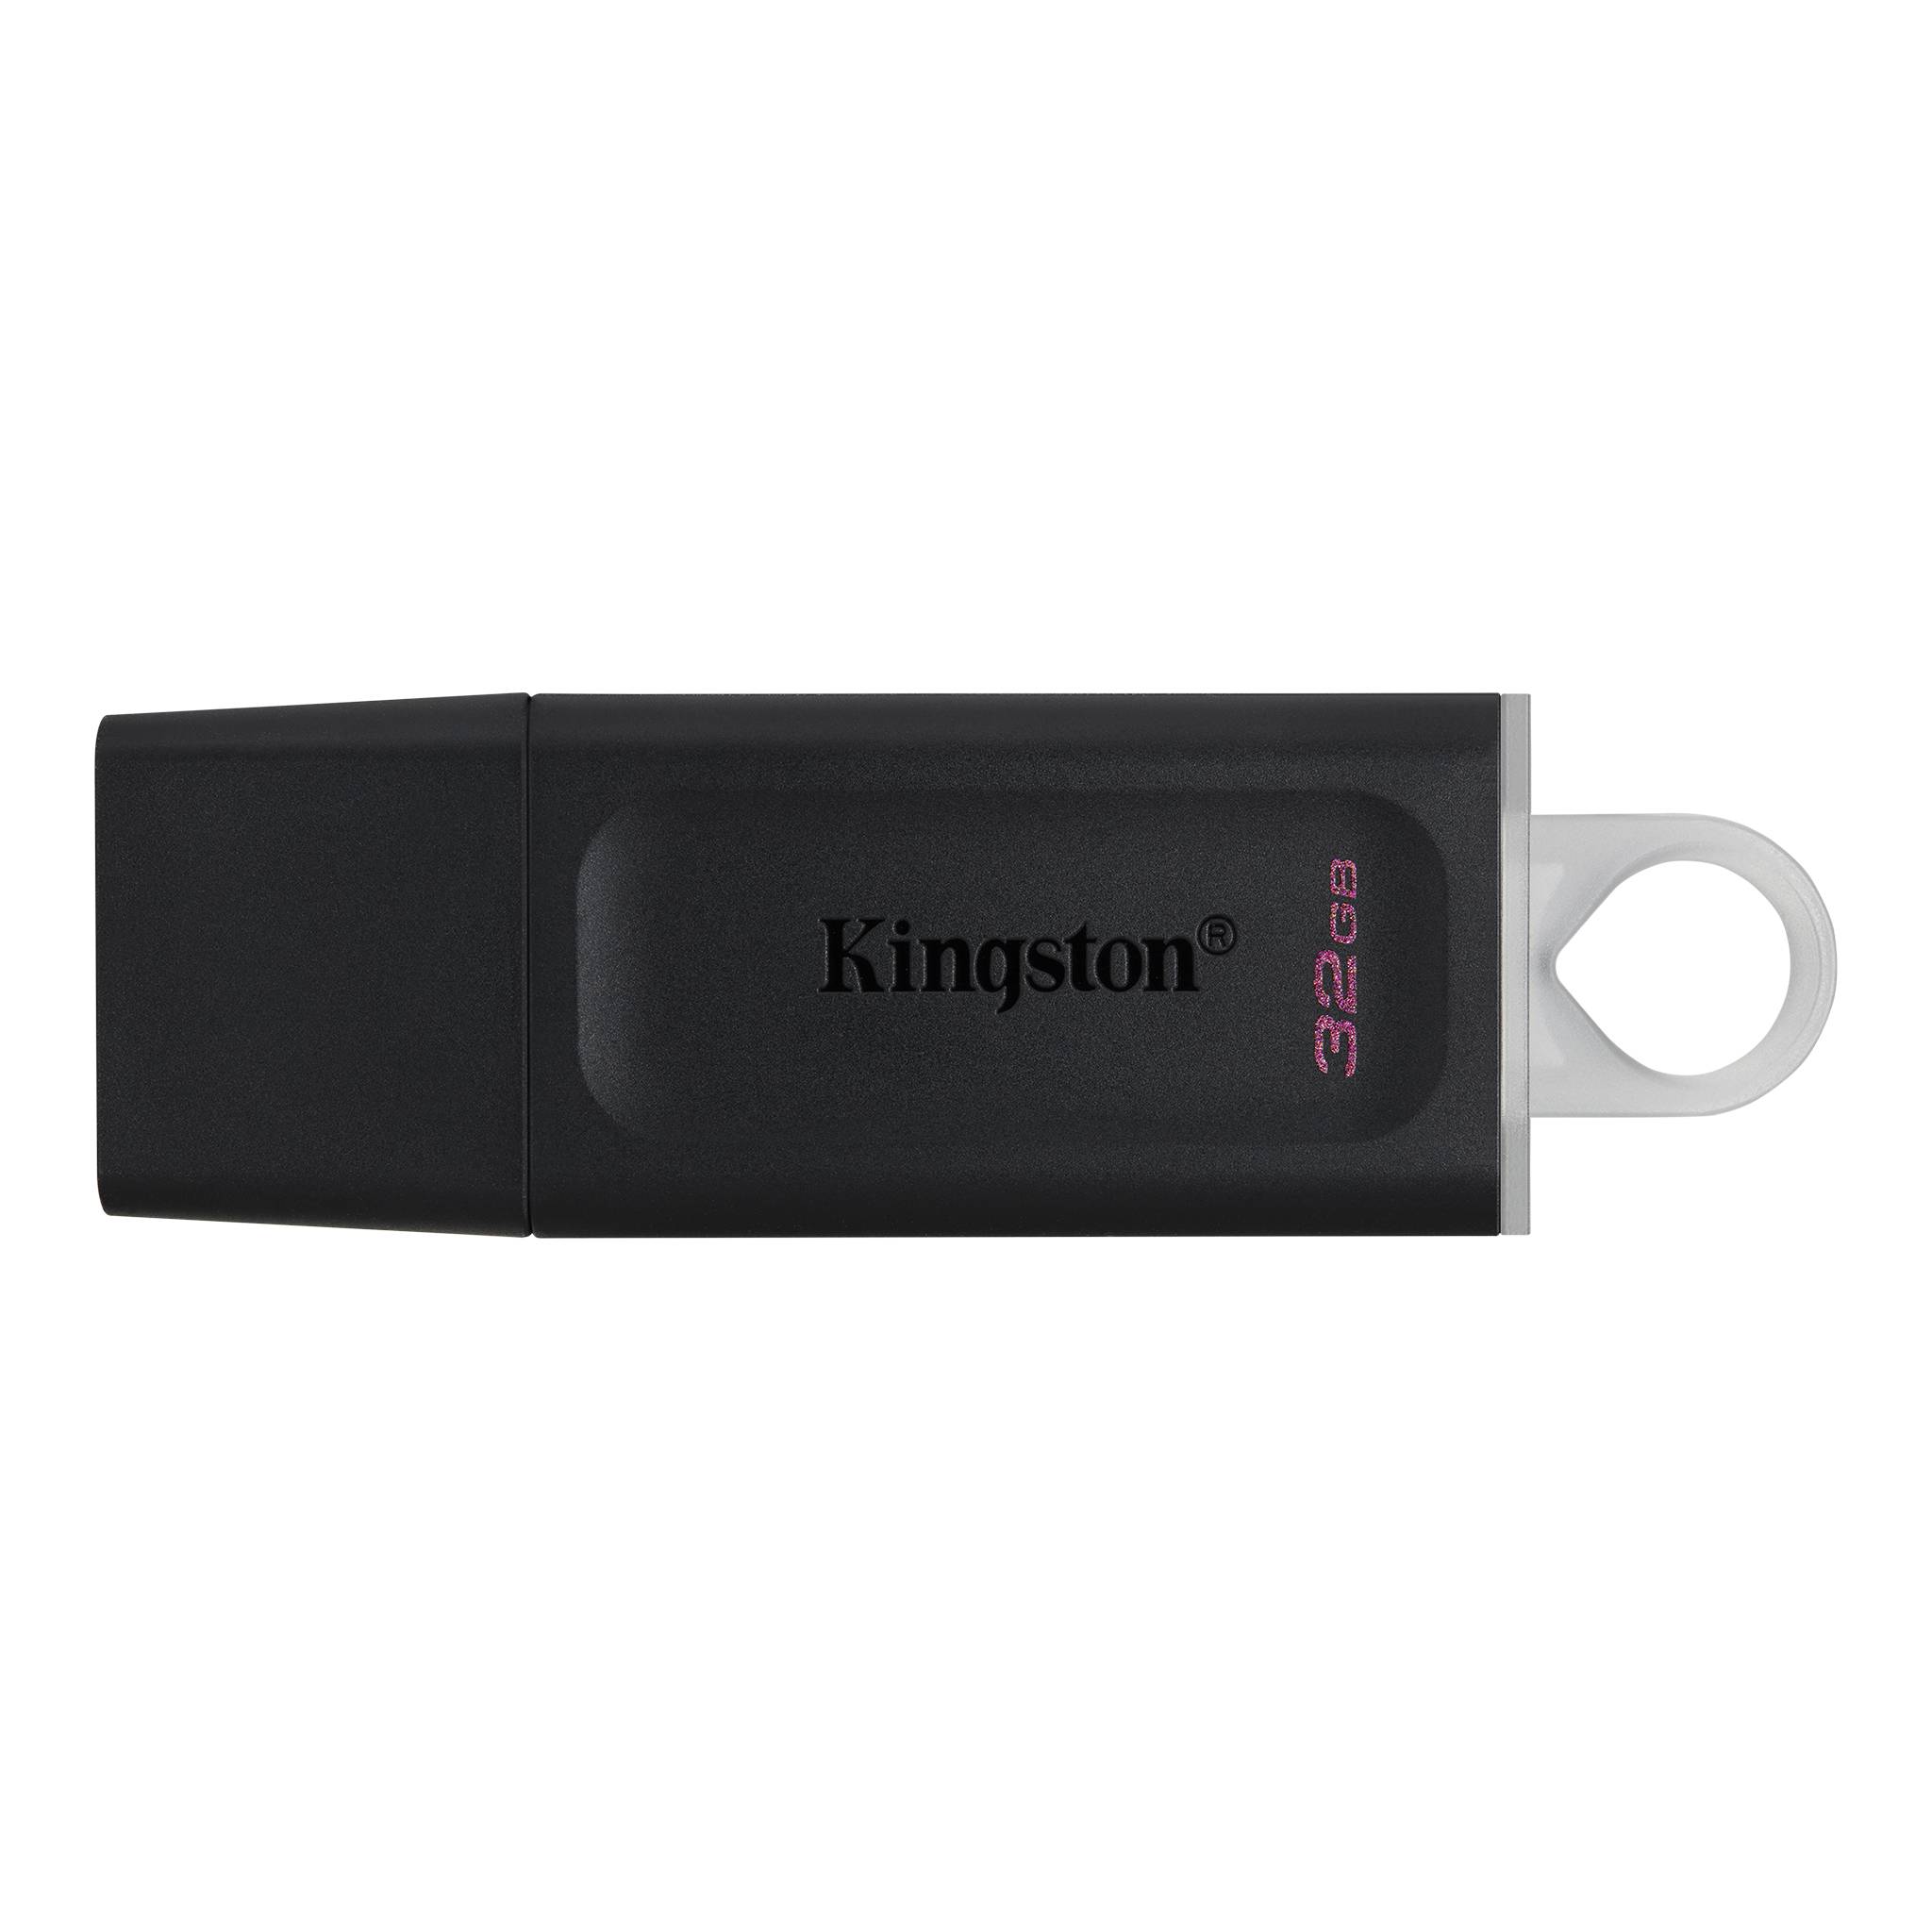 buy Kingston 32GB USB3.0 Flash Drive Memory Stick Thumb Key DataTraveler DT100G3 Retail Pack 5yrs warranty ~USK-DT100G3-32F DT100G3/32GBFR online from our Melbourne shop